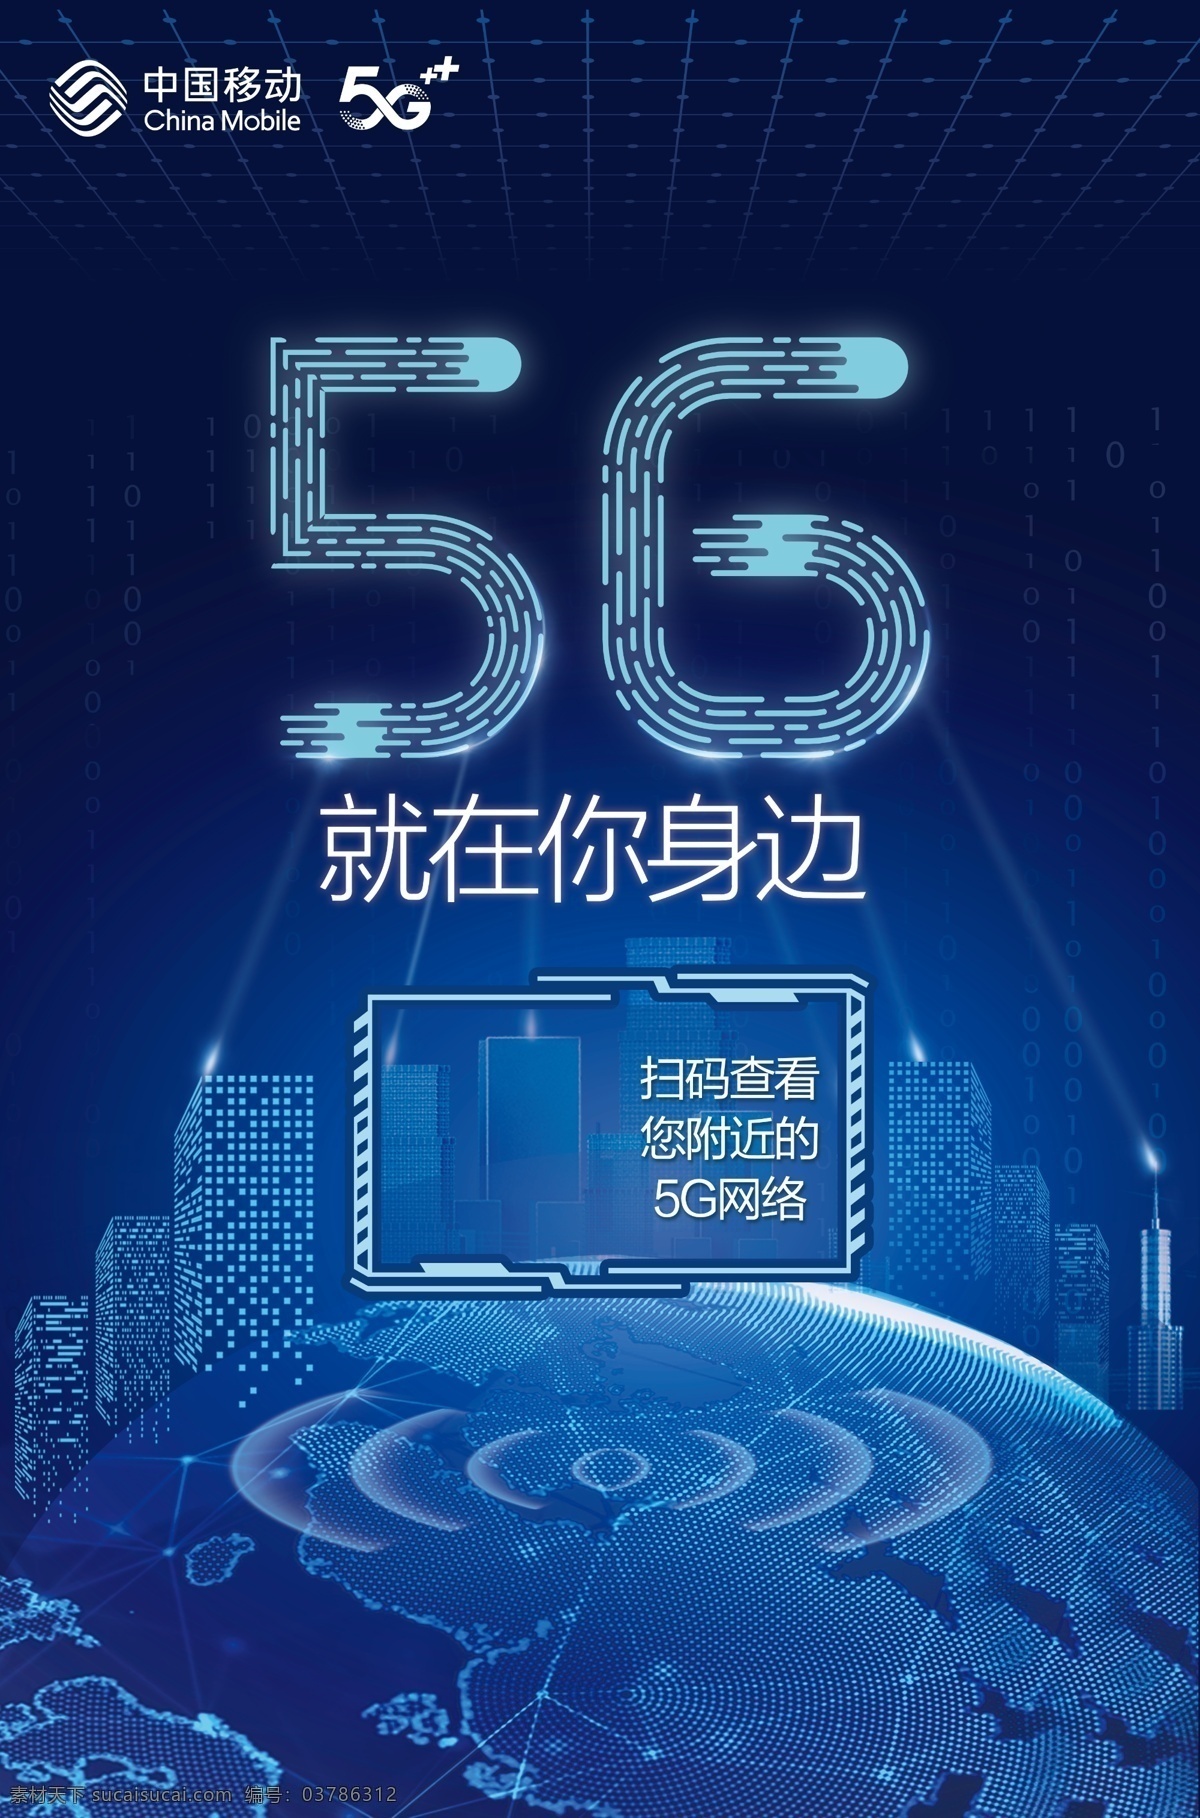 5g 身边 中国移动 移动5g 蓝色科技